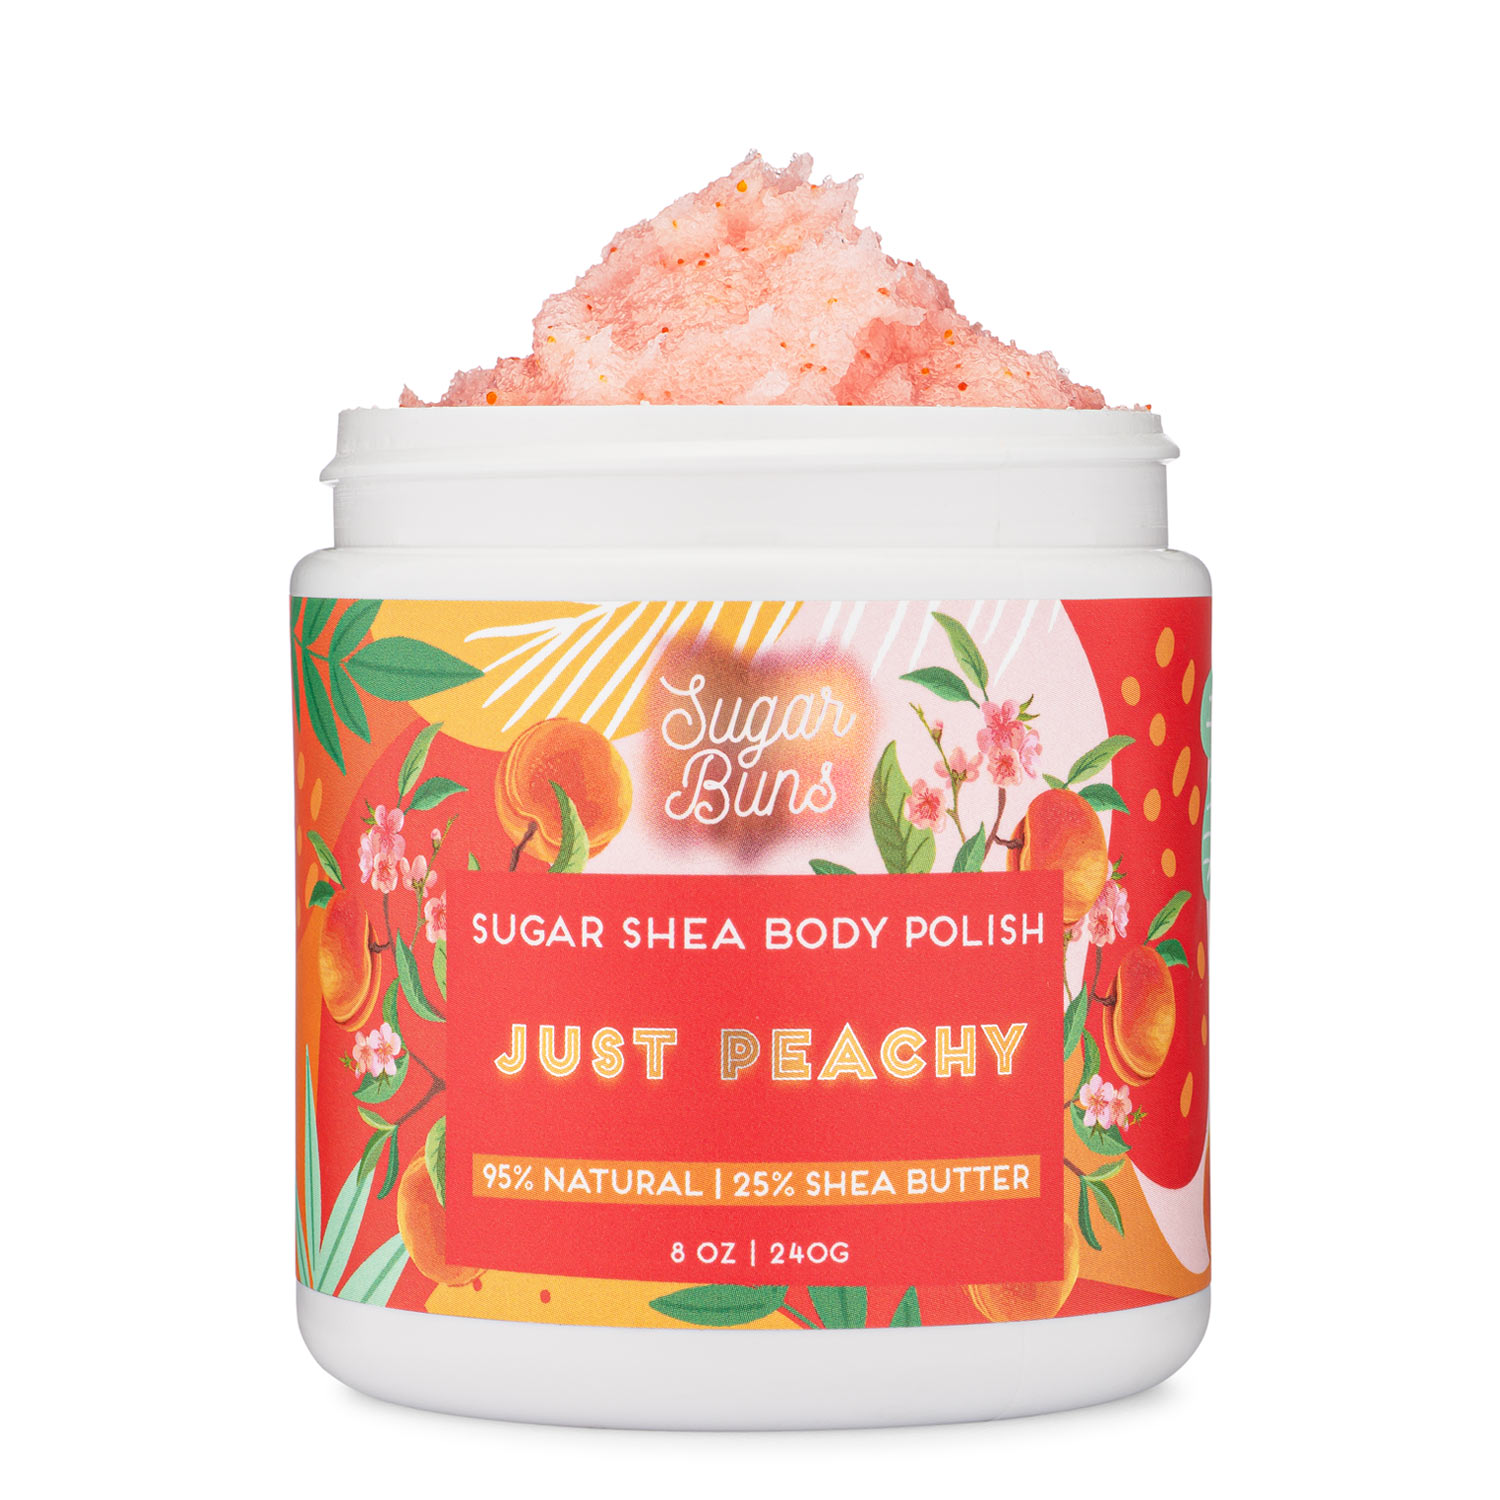 Sugar Shea Body Polish - Just Peachy Sugar Buns Image